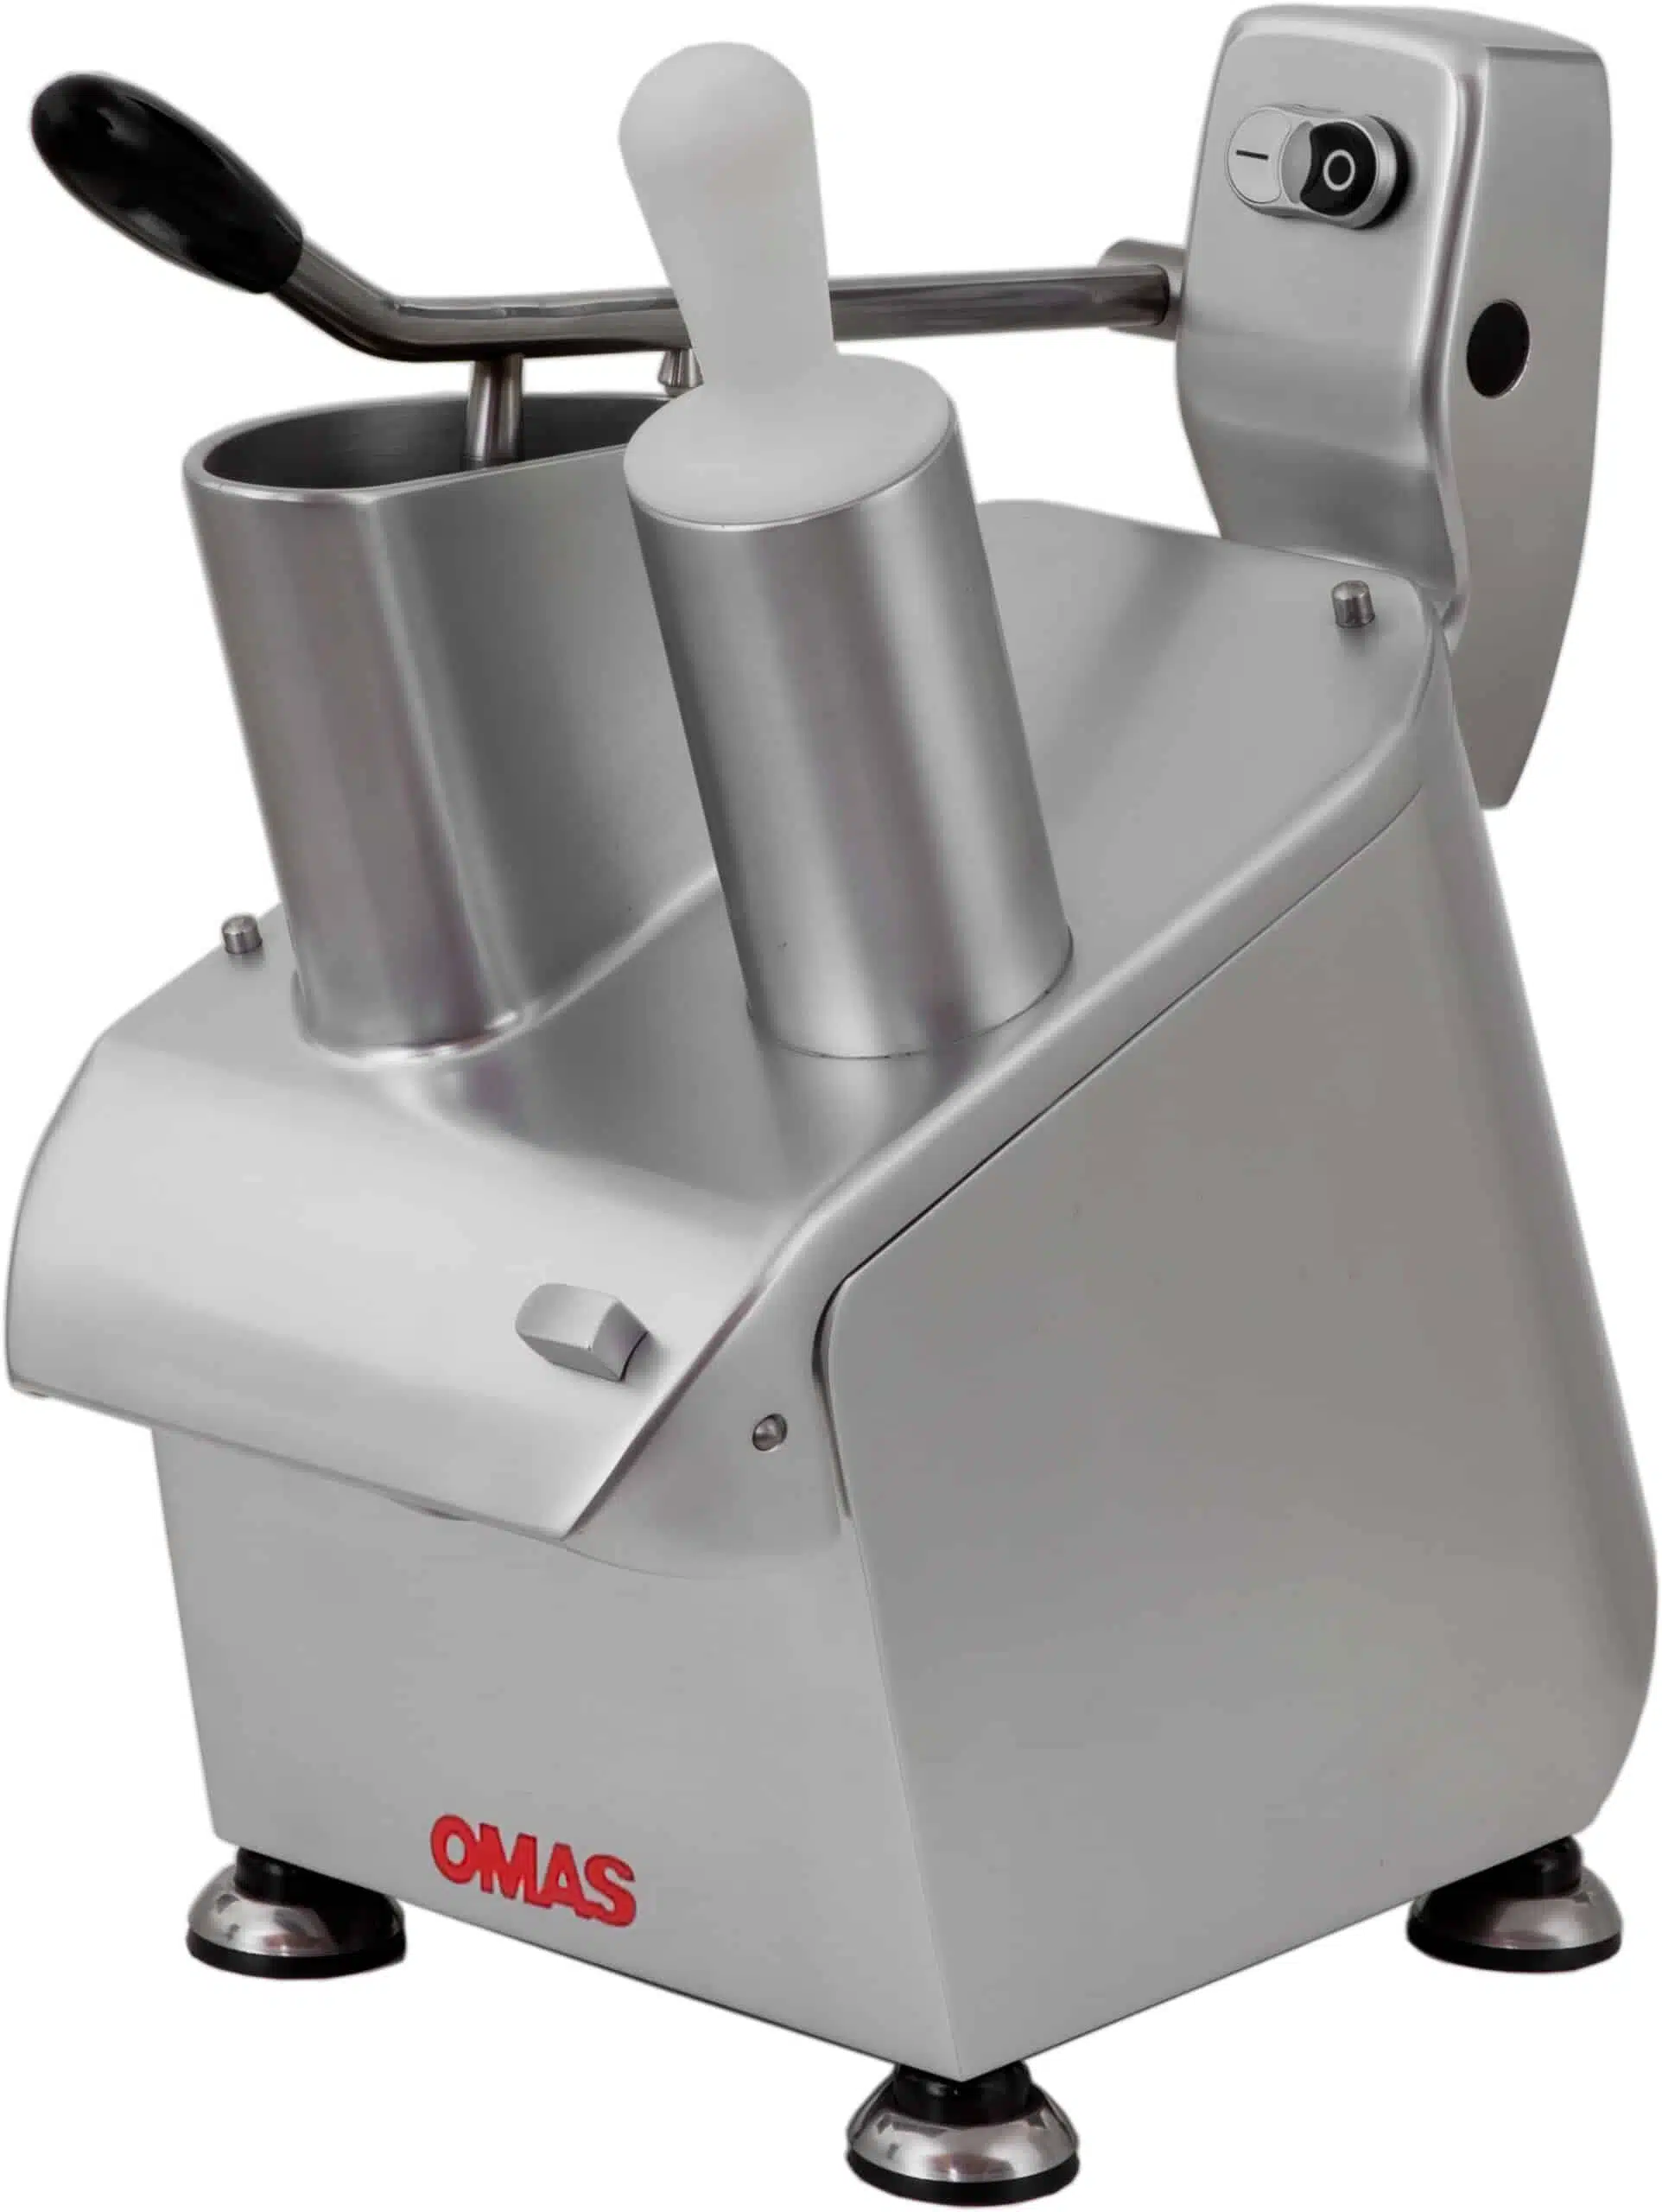 OMAS Expert 205: Our Ultimate Vegetable Cutter Solution 120V